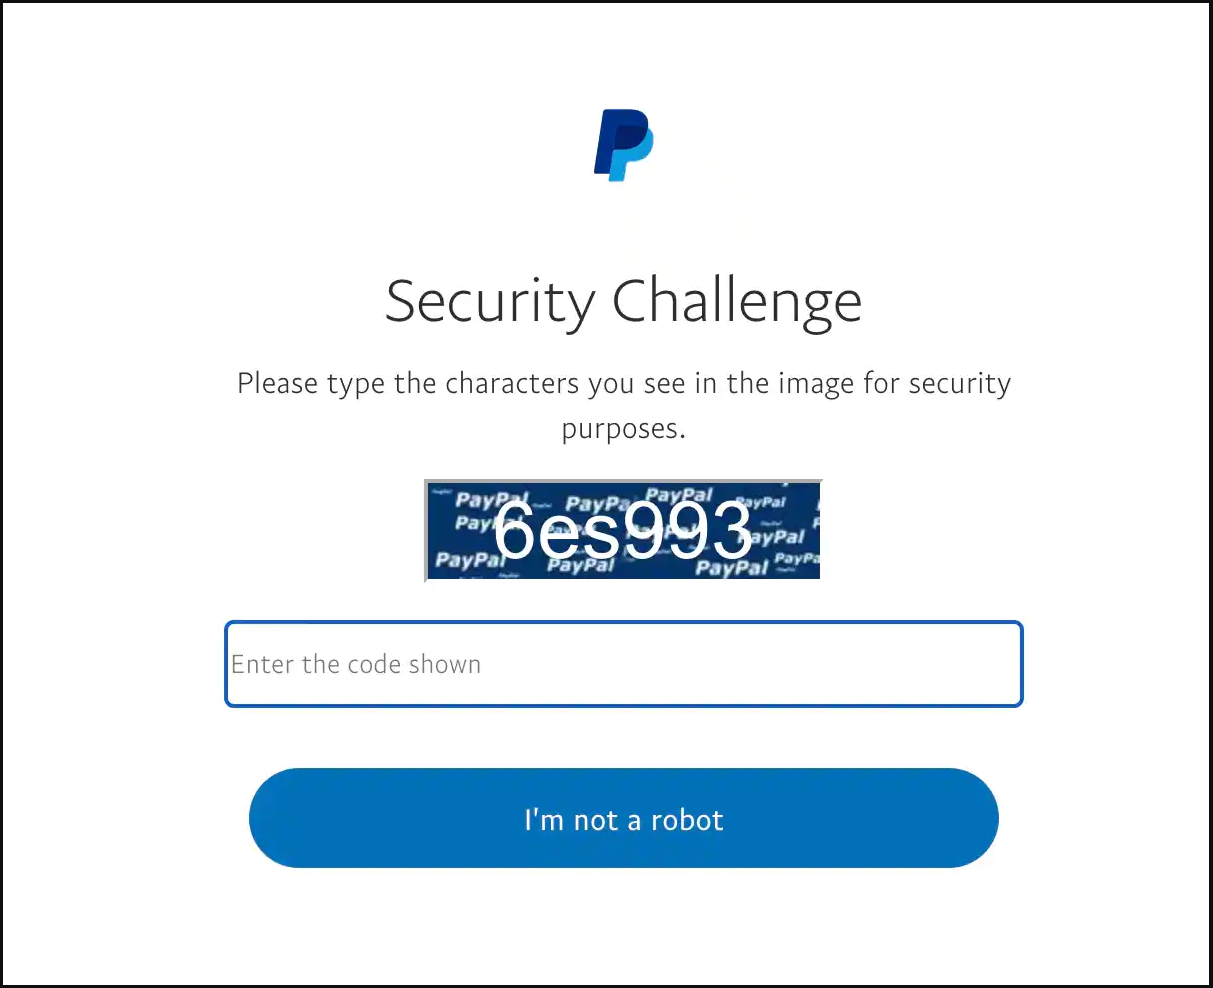 Bogus CAPTCHA step on the phishing site